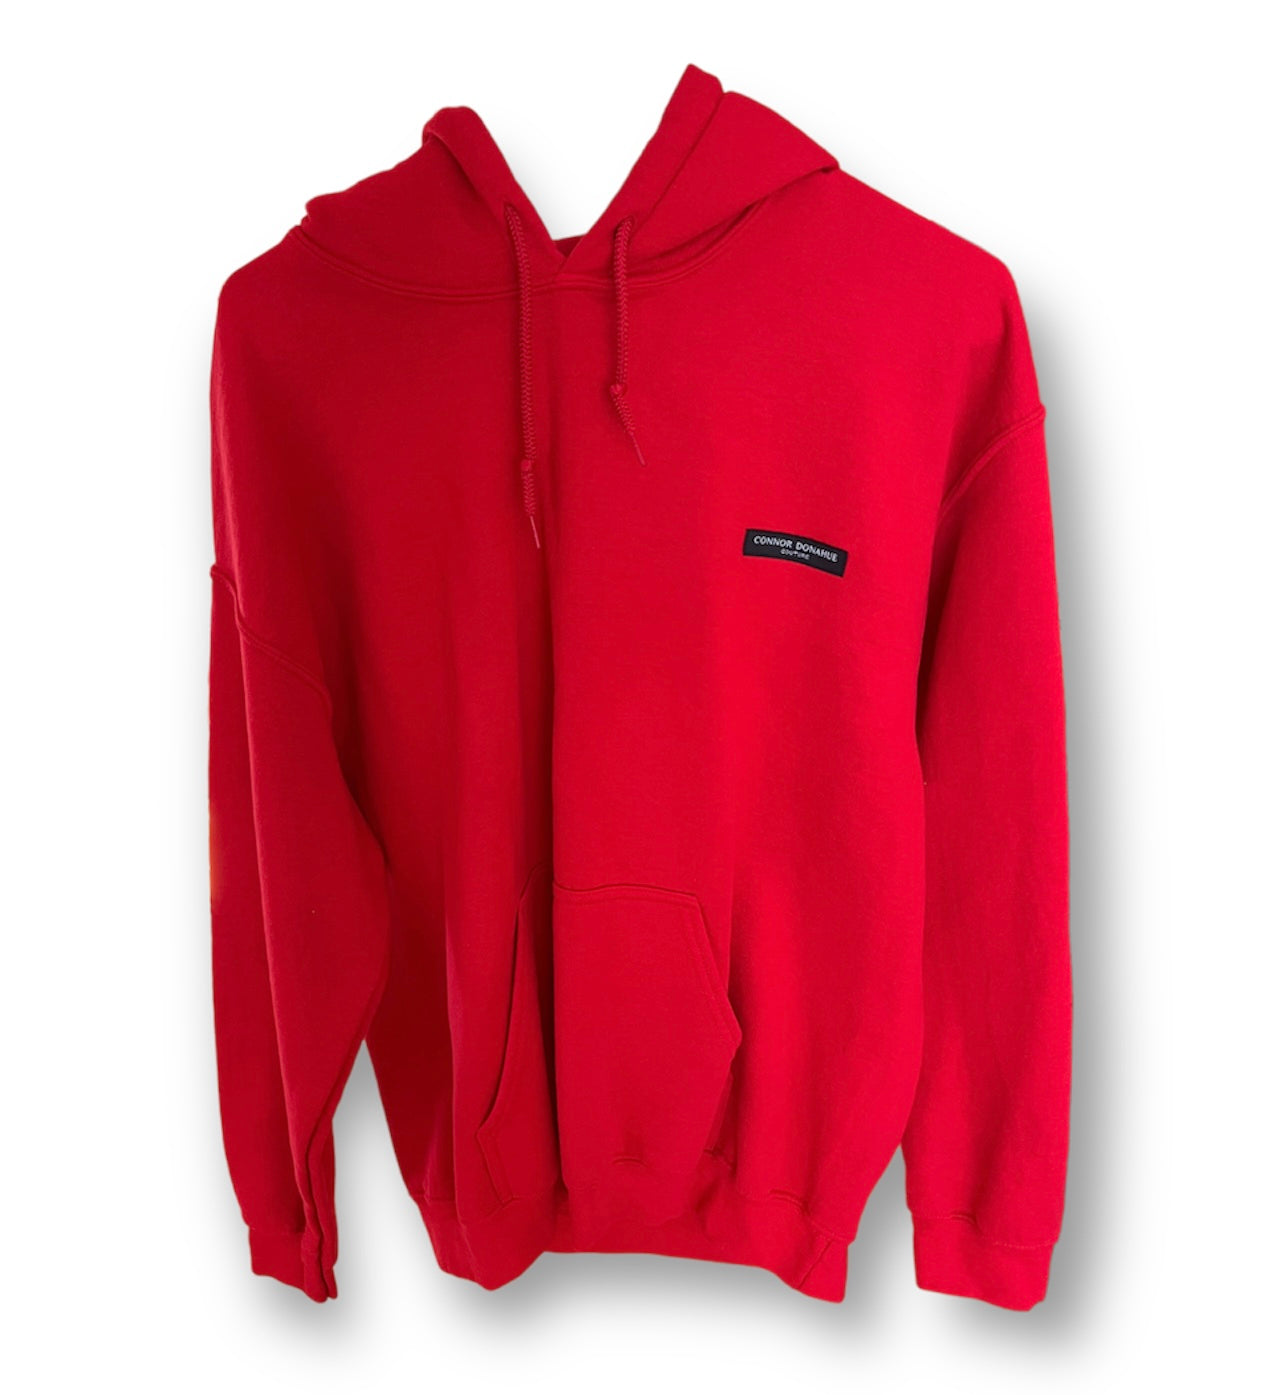 Renaissance Hooded Sweatshirt (Red)